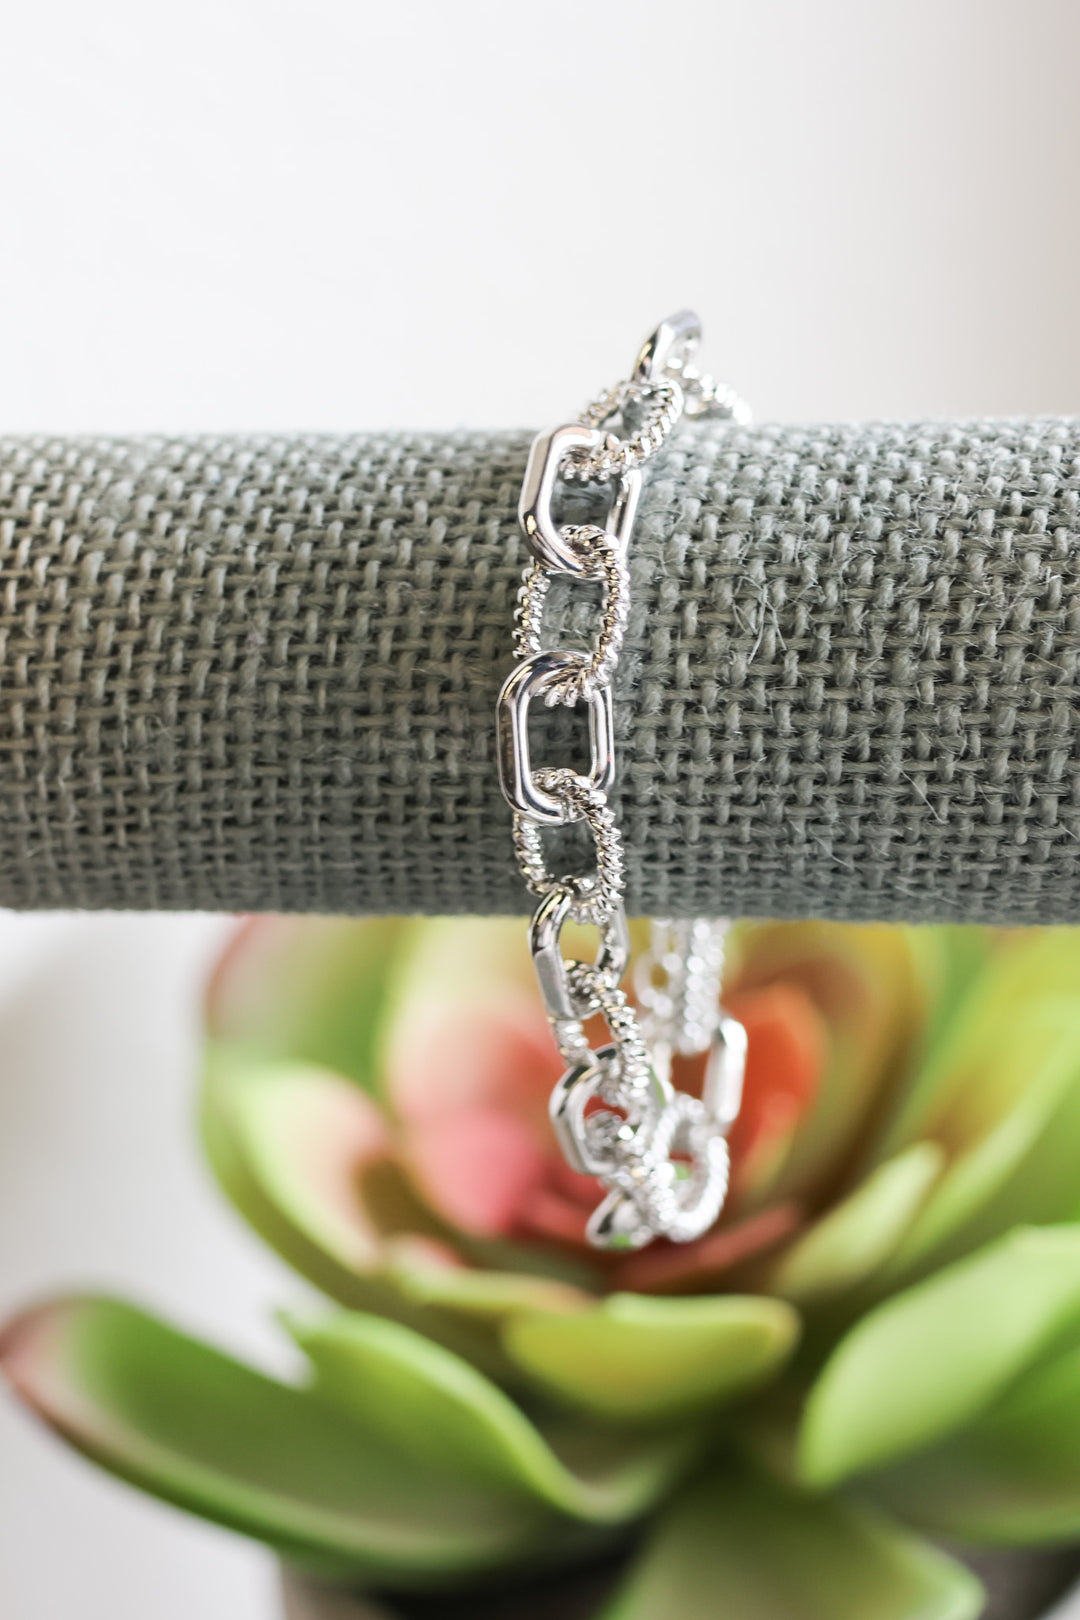 Linked For Life Bracelet In Silver - ShopSpoiled